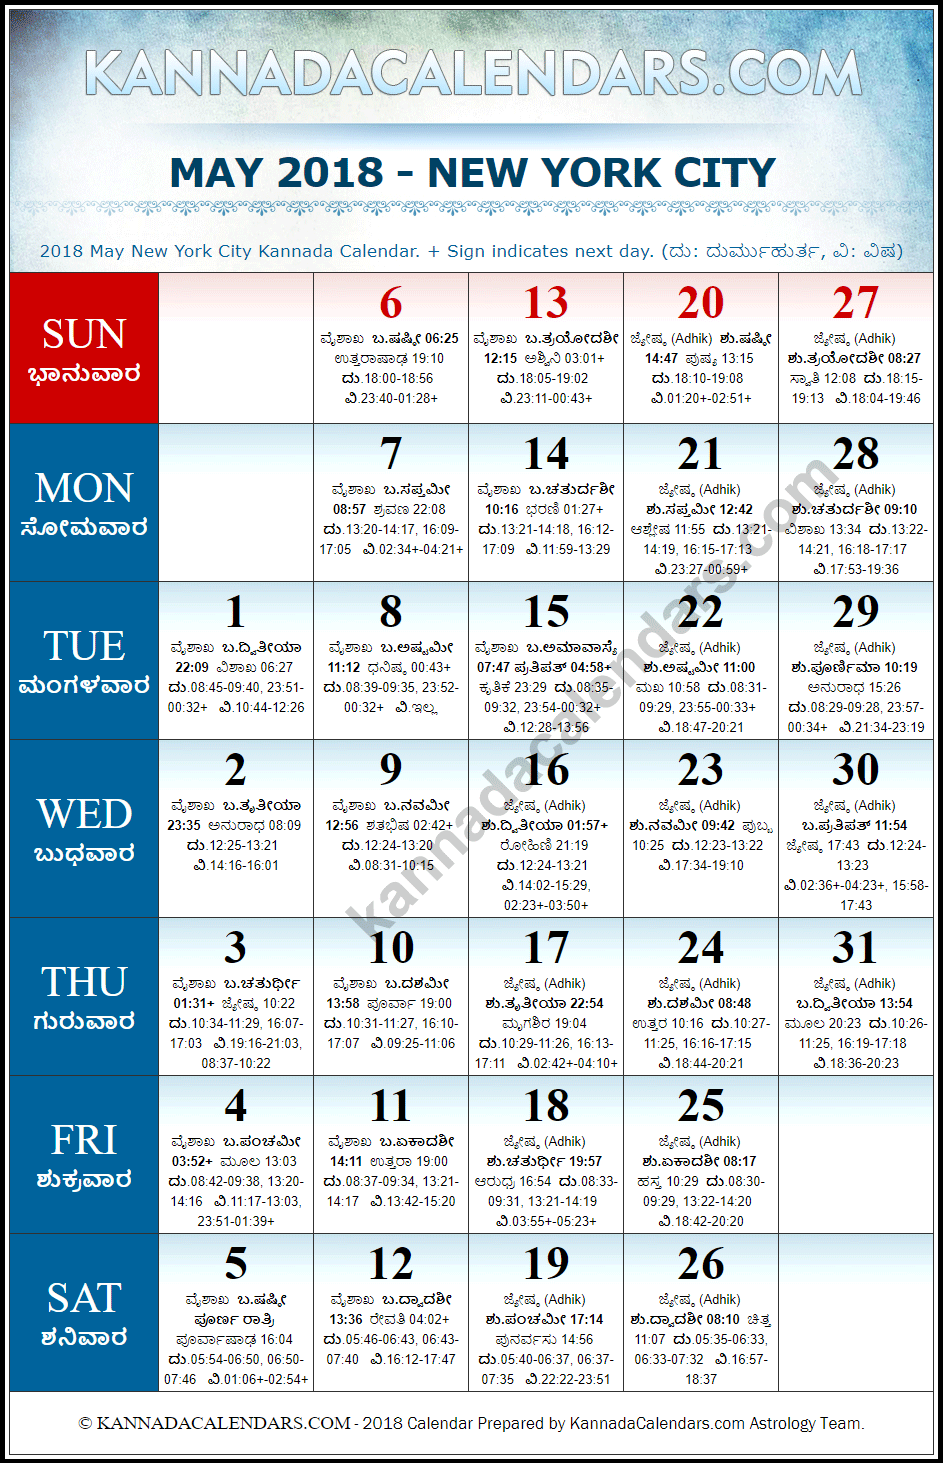 May 2018 Kannada Calendar for New York, USA